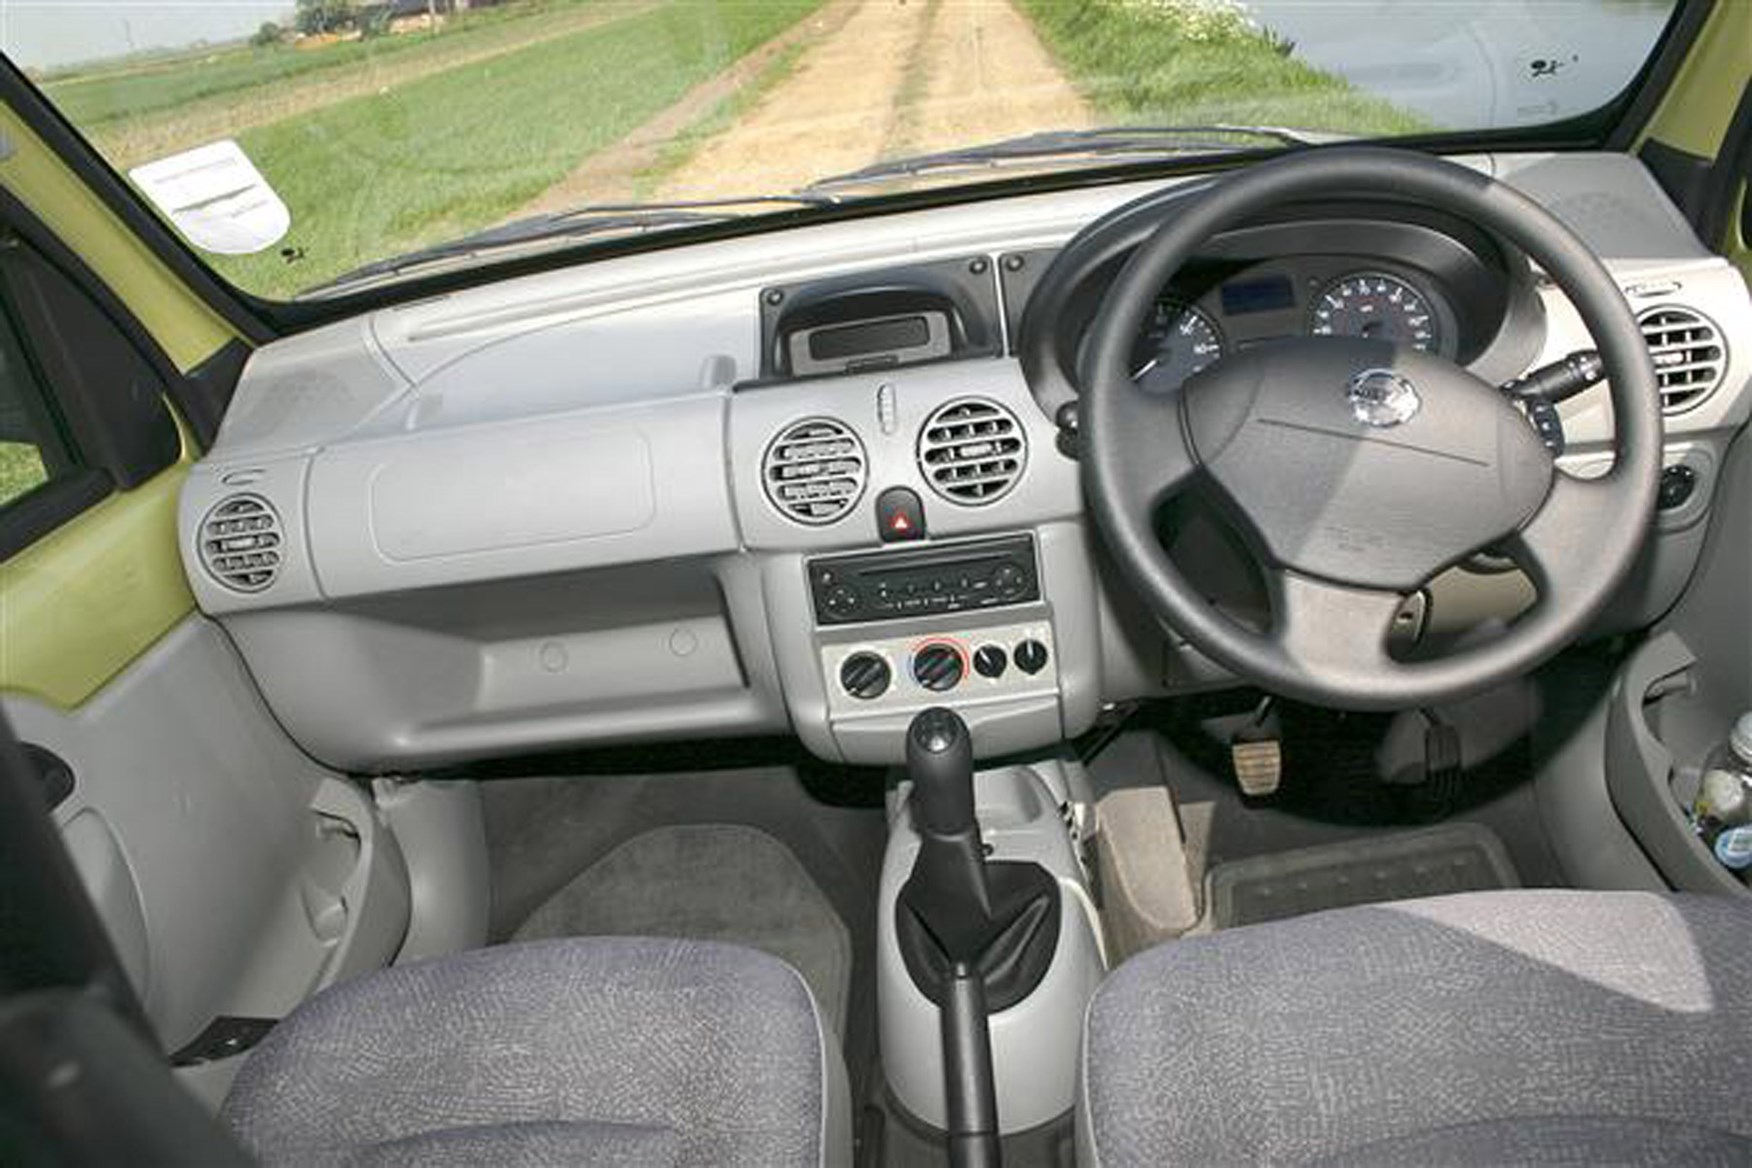 Nissan Kubistar review on Parkers Vans - interior